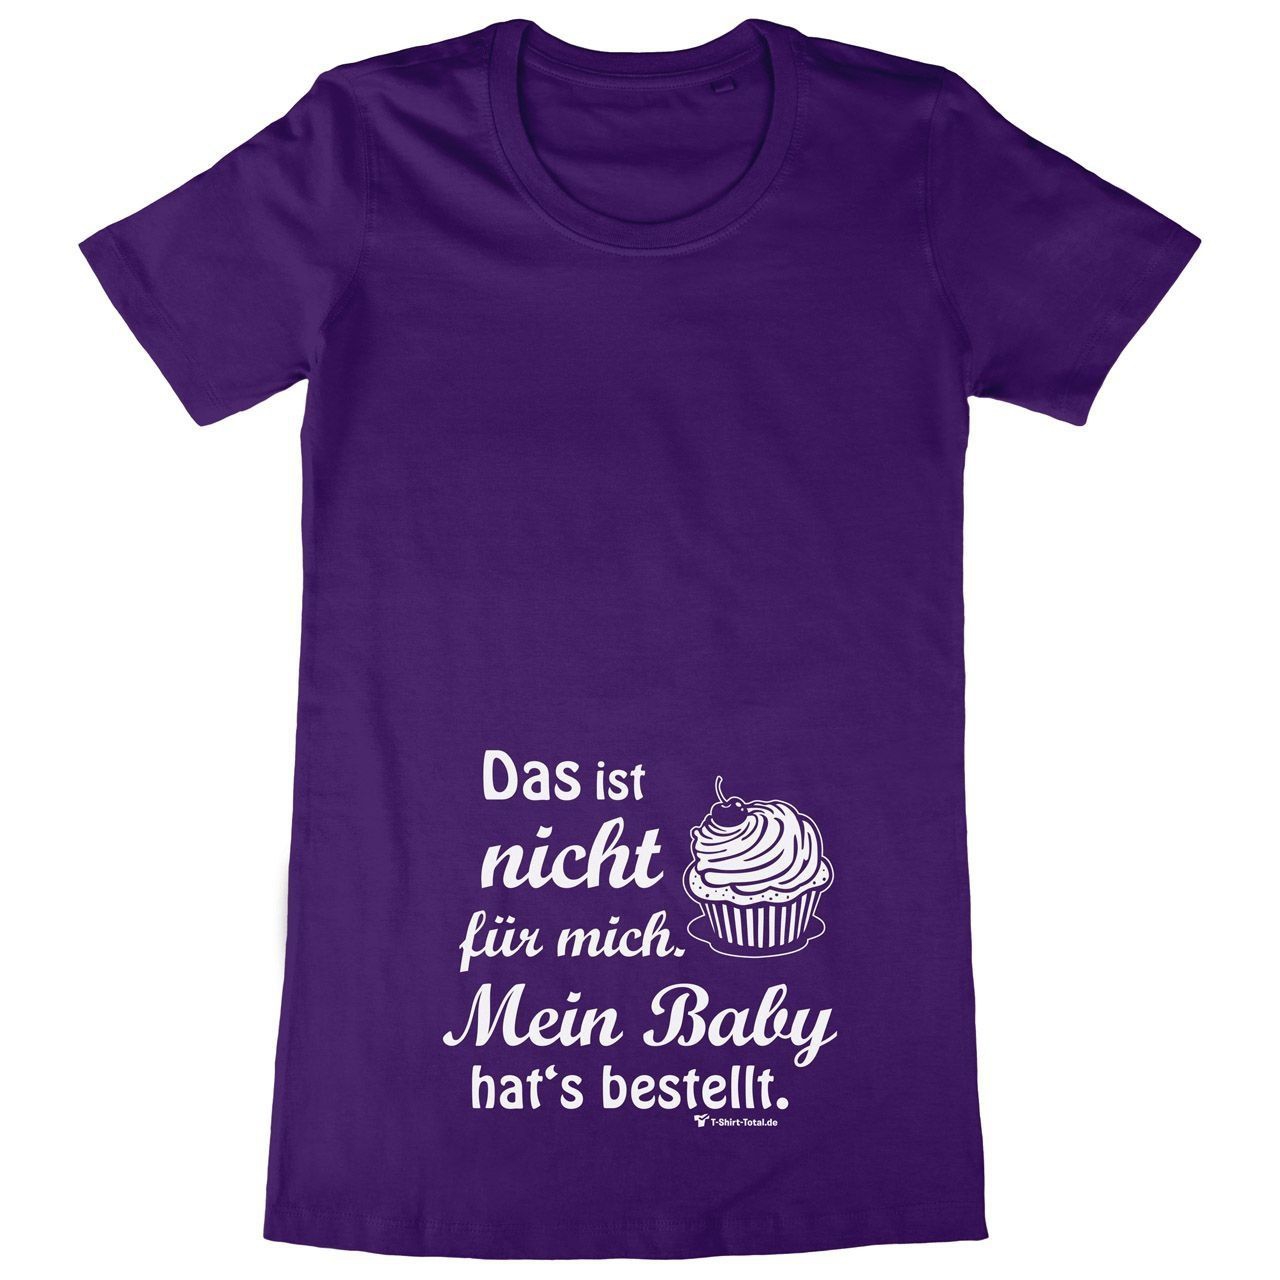 Baby hats bestellt Woman Long Shirt lila 2-Extra Large